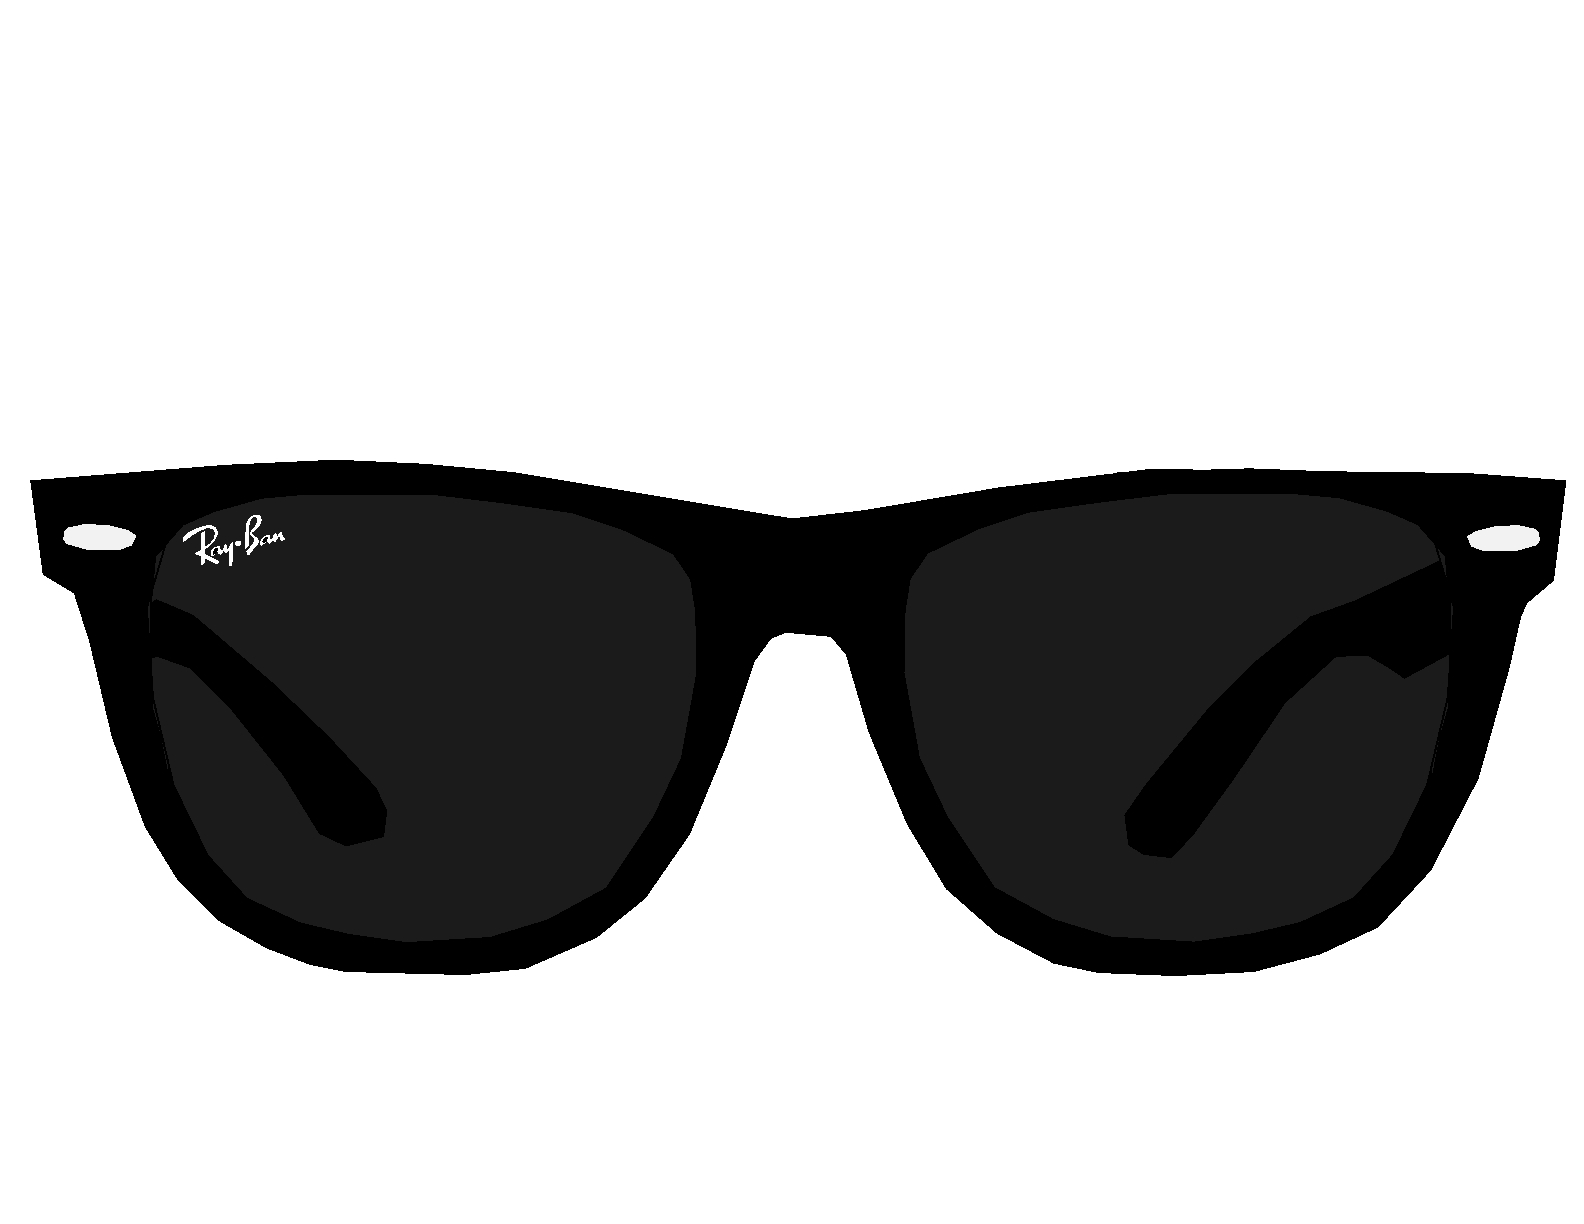 Sunglasses glasses clip art 4 clipartwiz clipartix 2